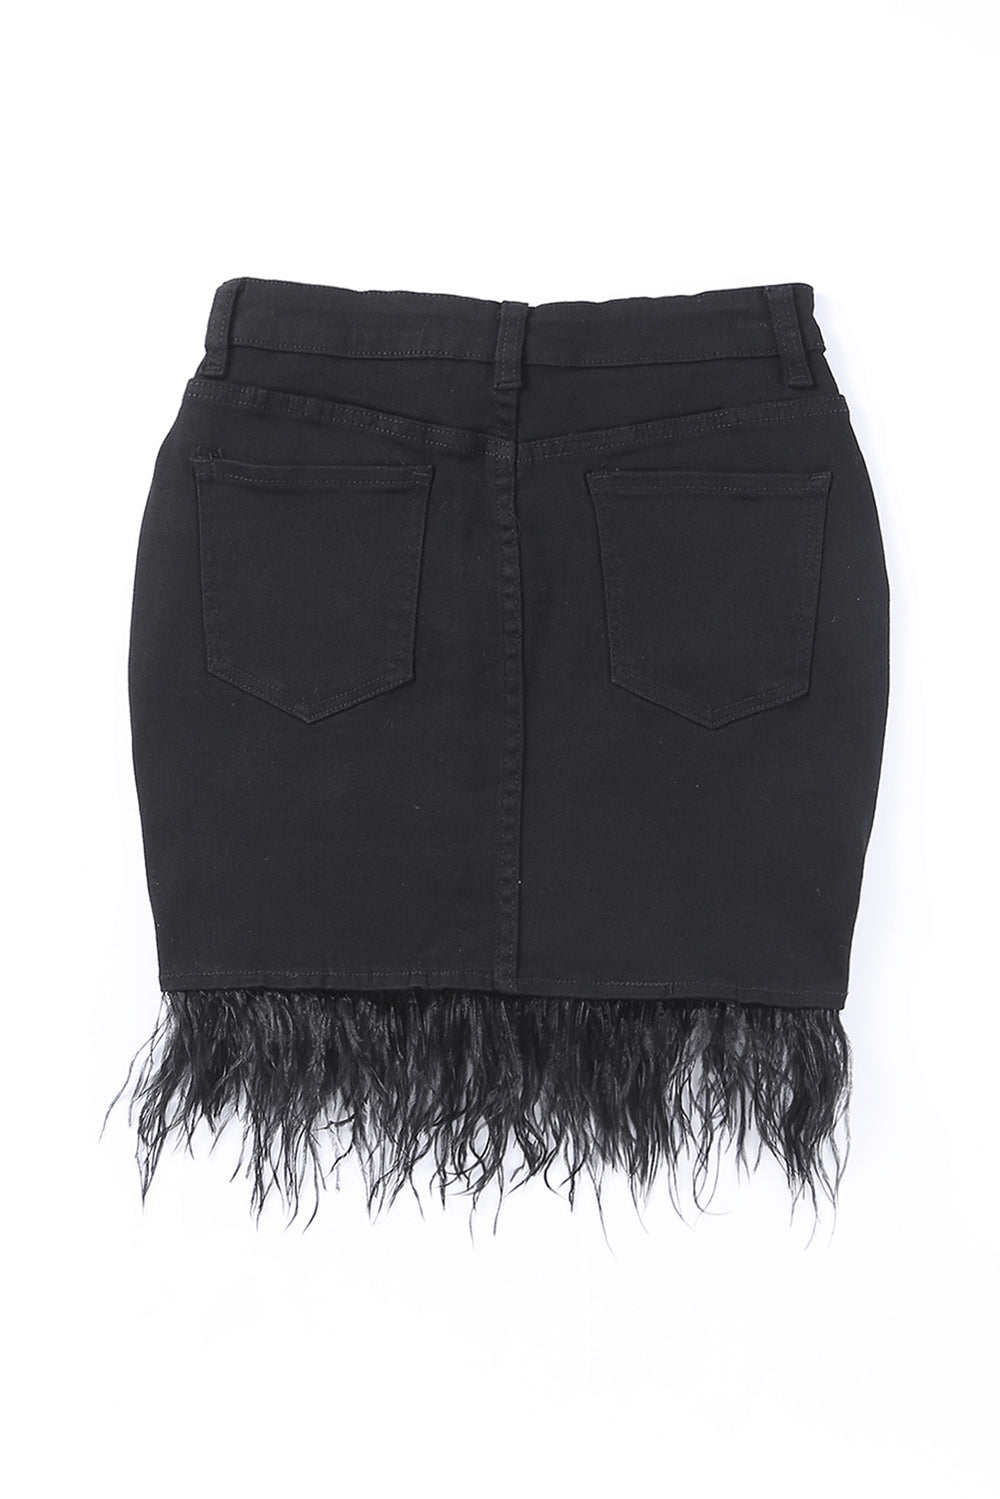 Womens Black Feather Fringed Denim Skirt Image 2